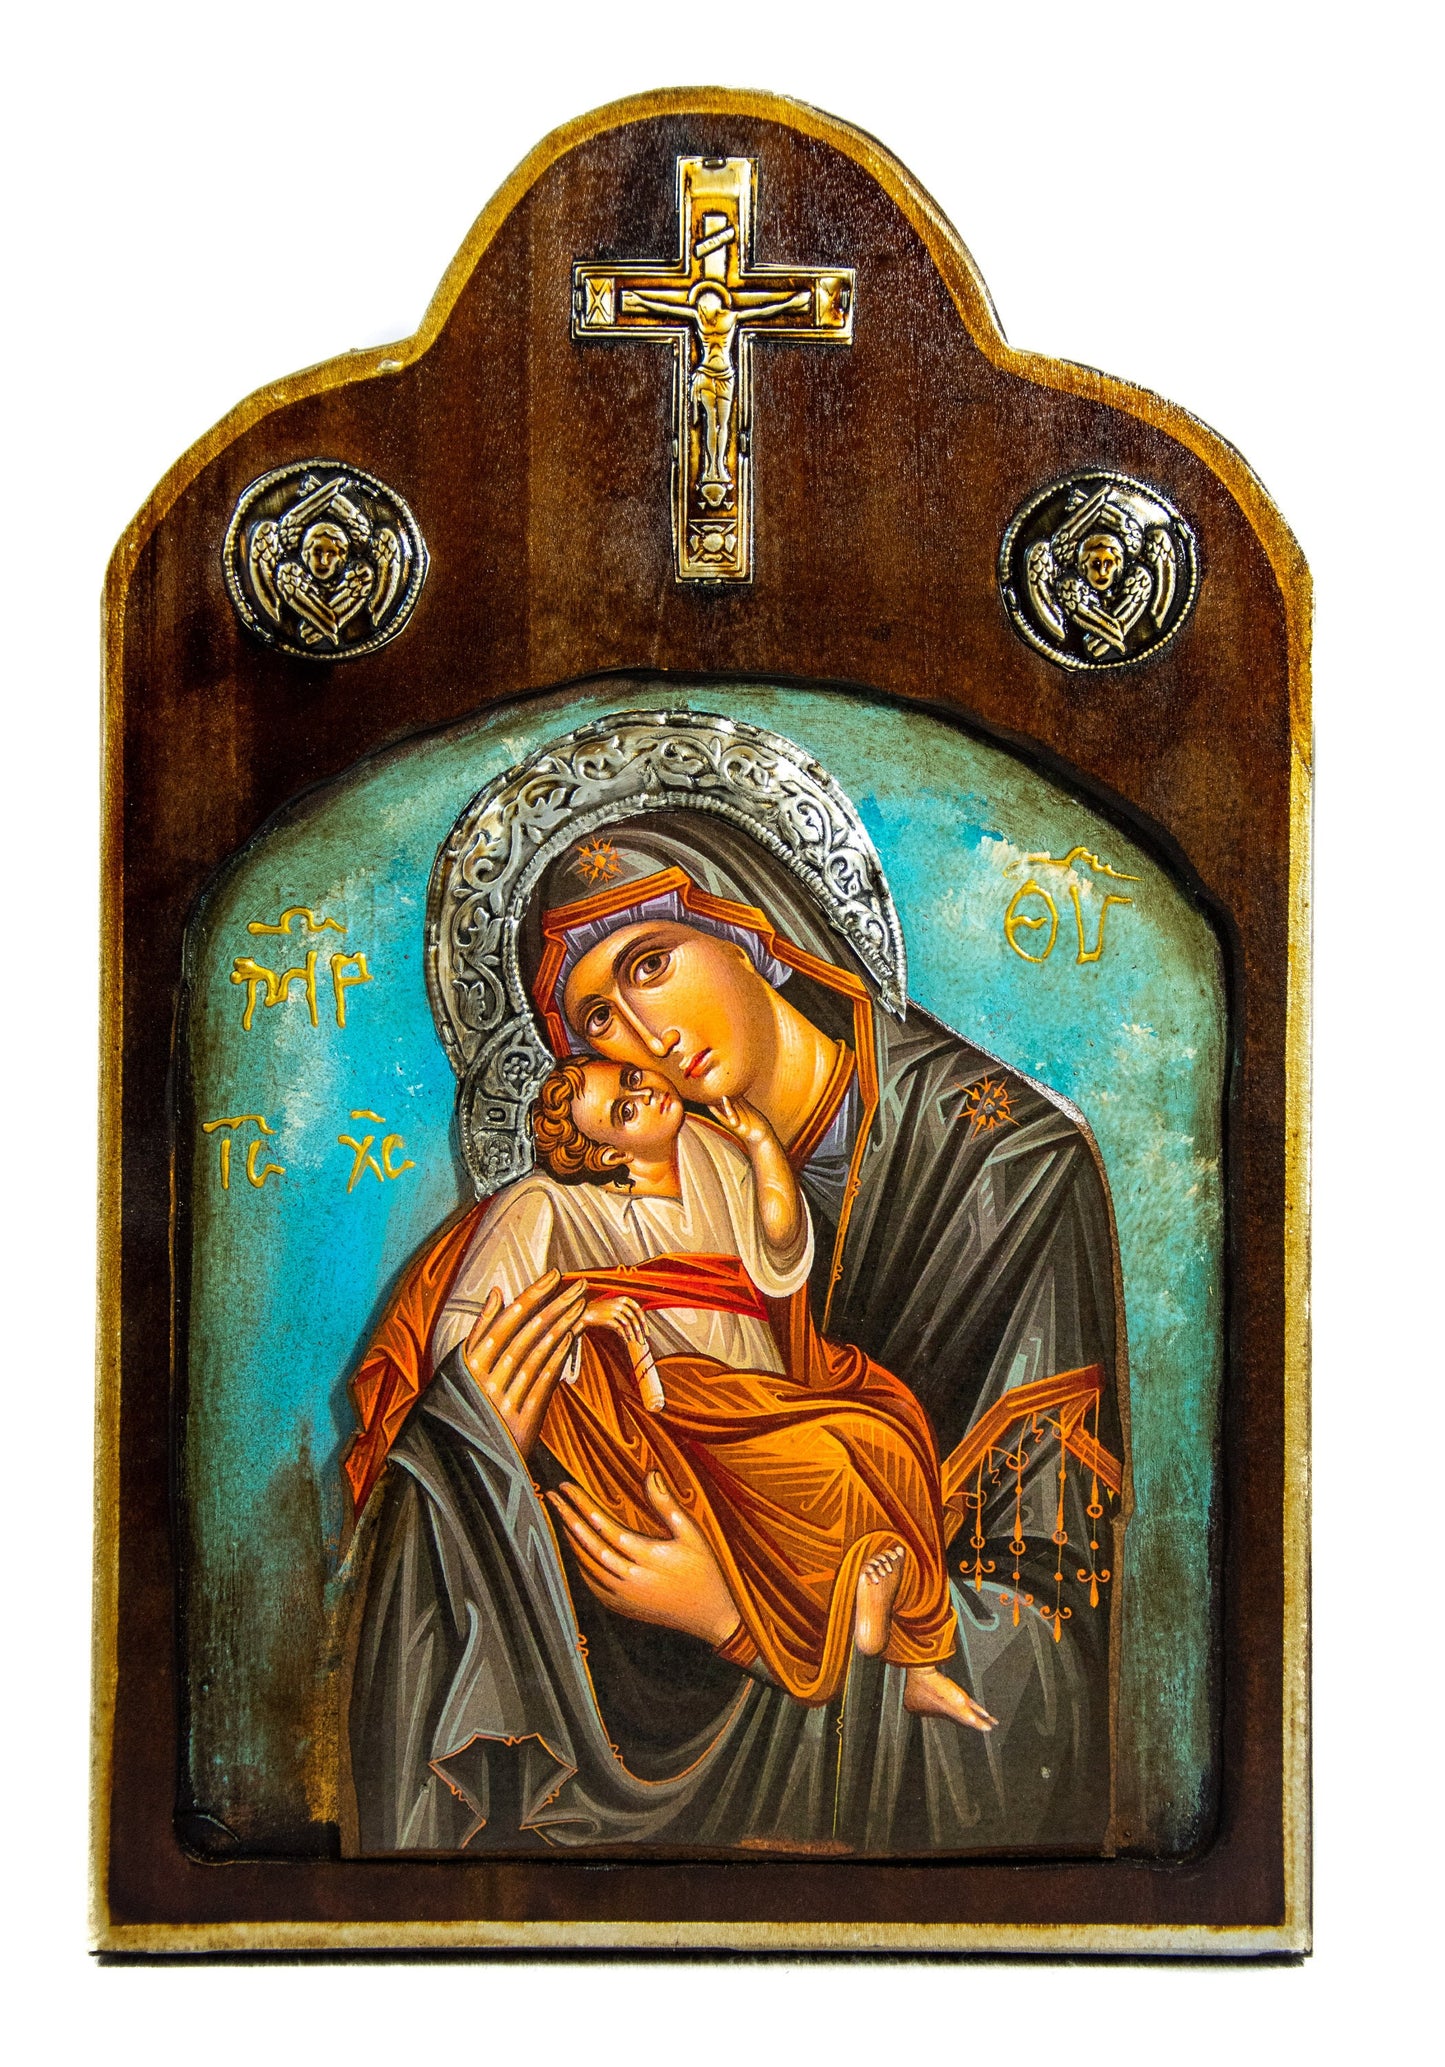 Virgin Mary icon Panagia Handmade Greek Christian Orthodox Icon Theotokos Mother of God Byzantine art wall hanging wood plaque gift 38x25cm TheHolyArt